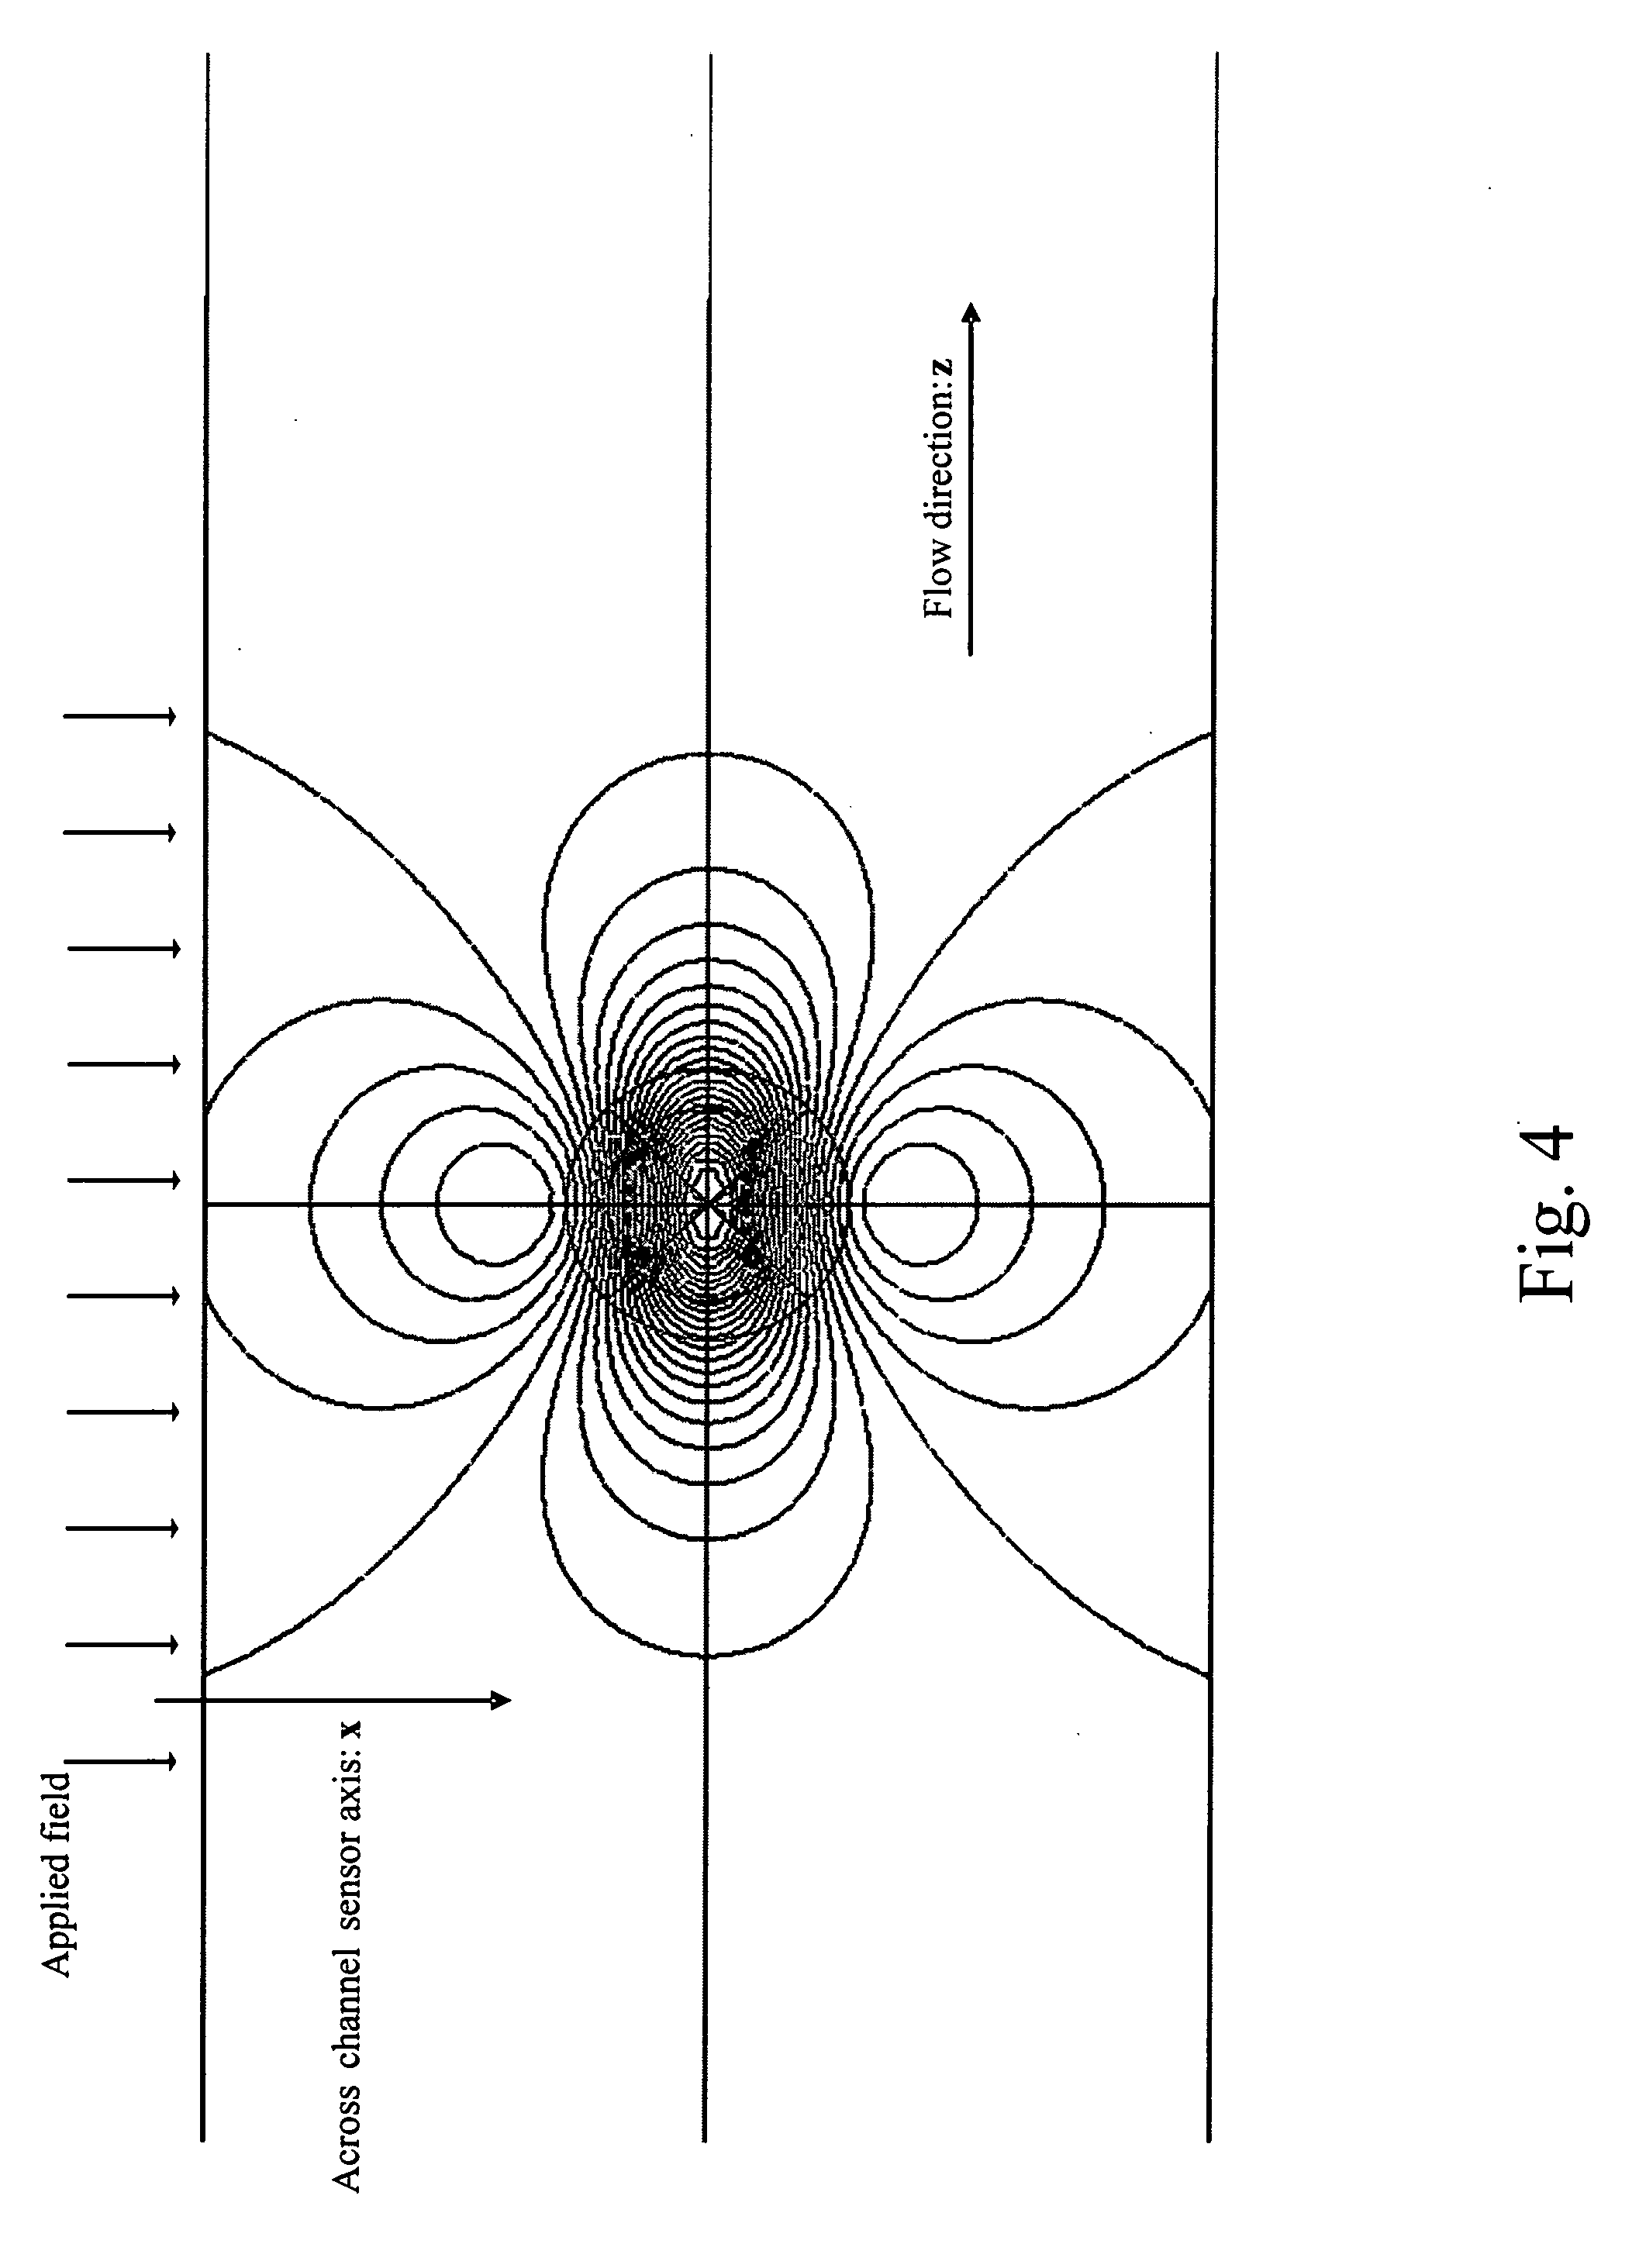 Magnetic particle flow detector